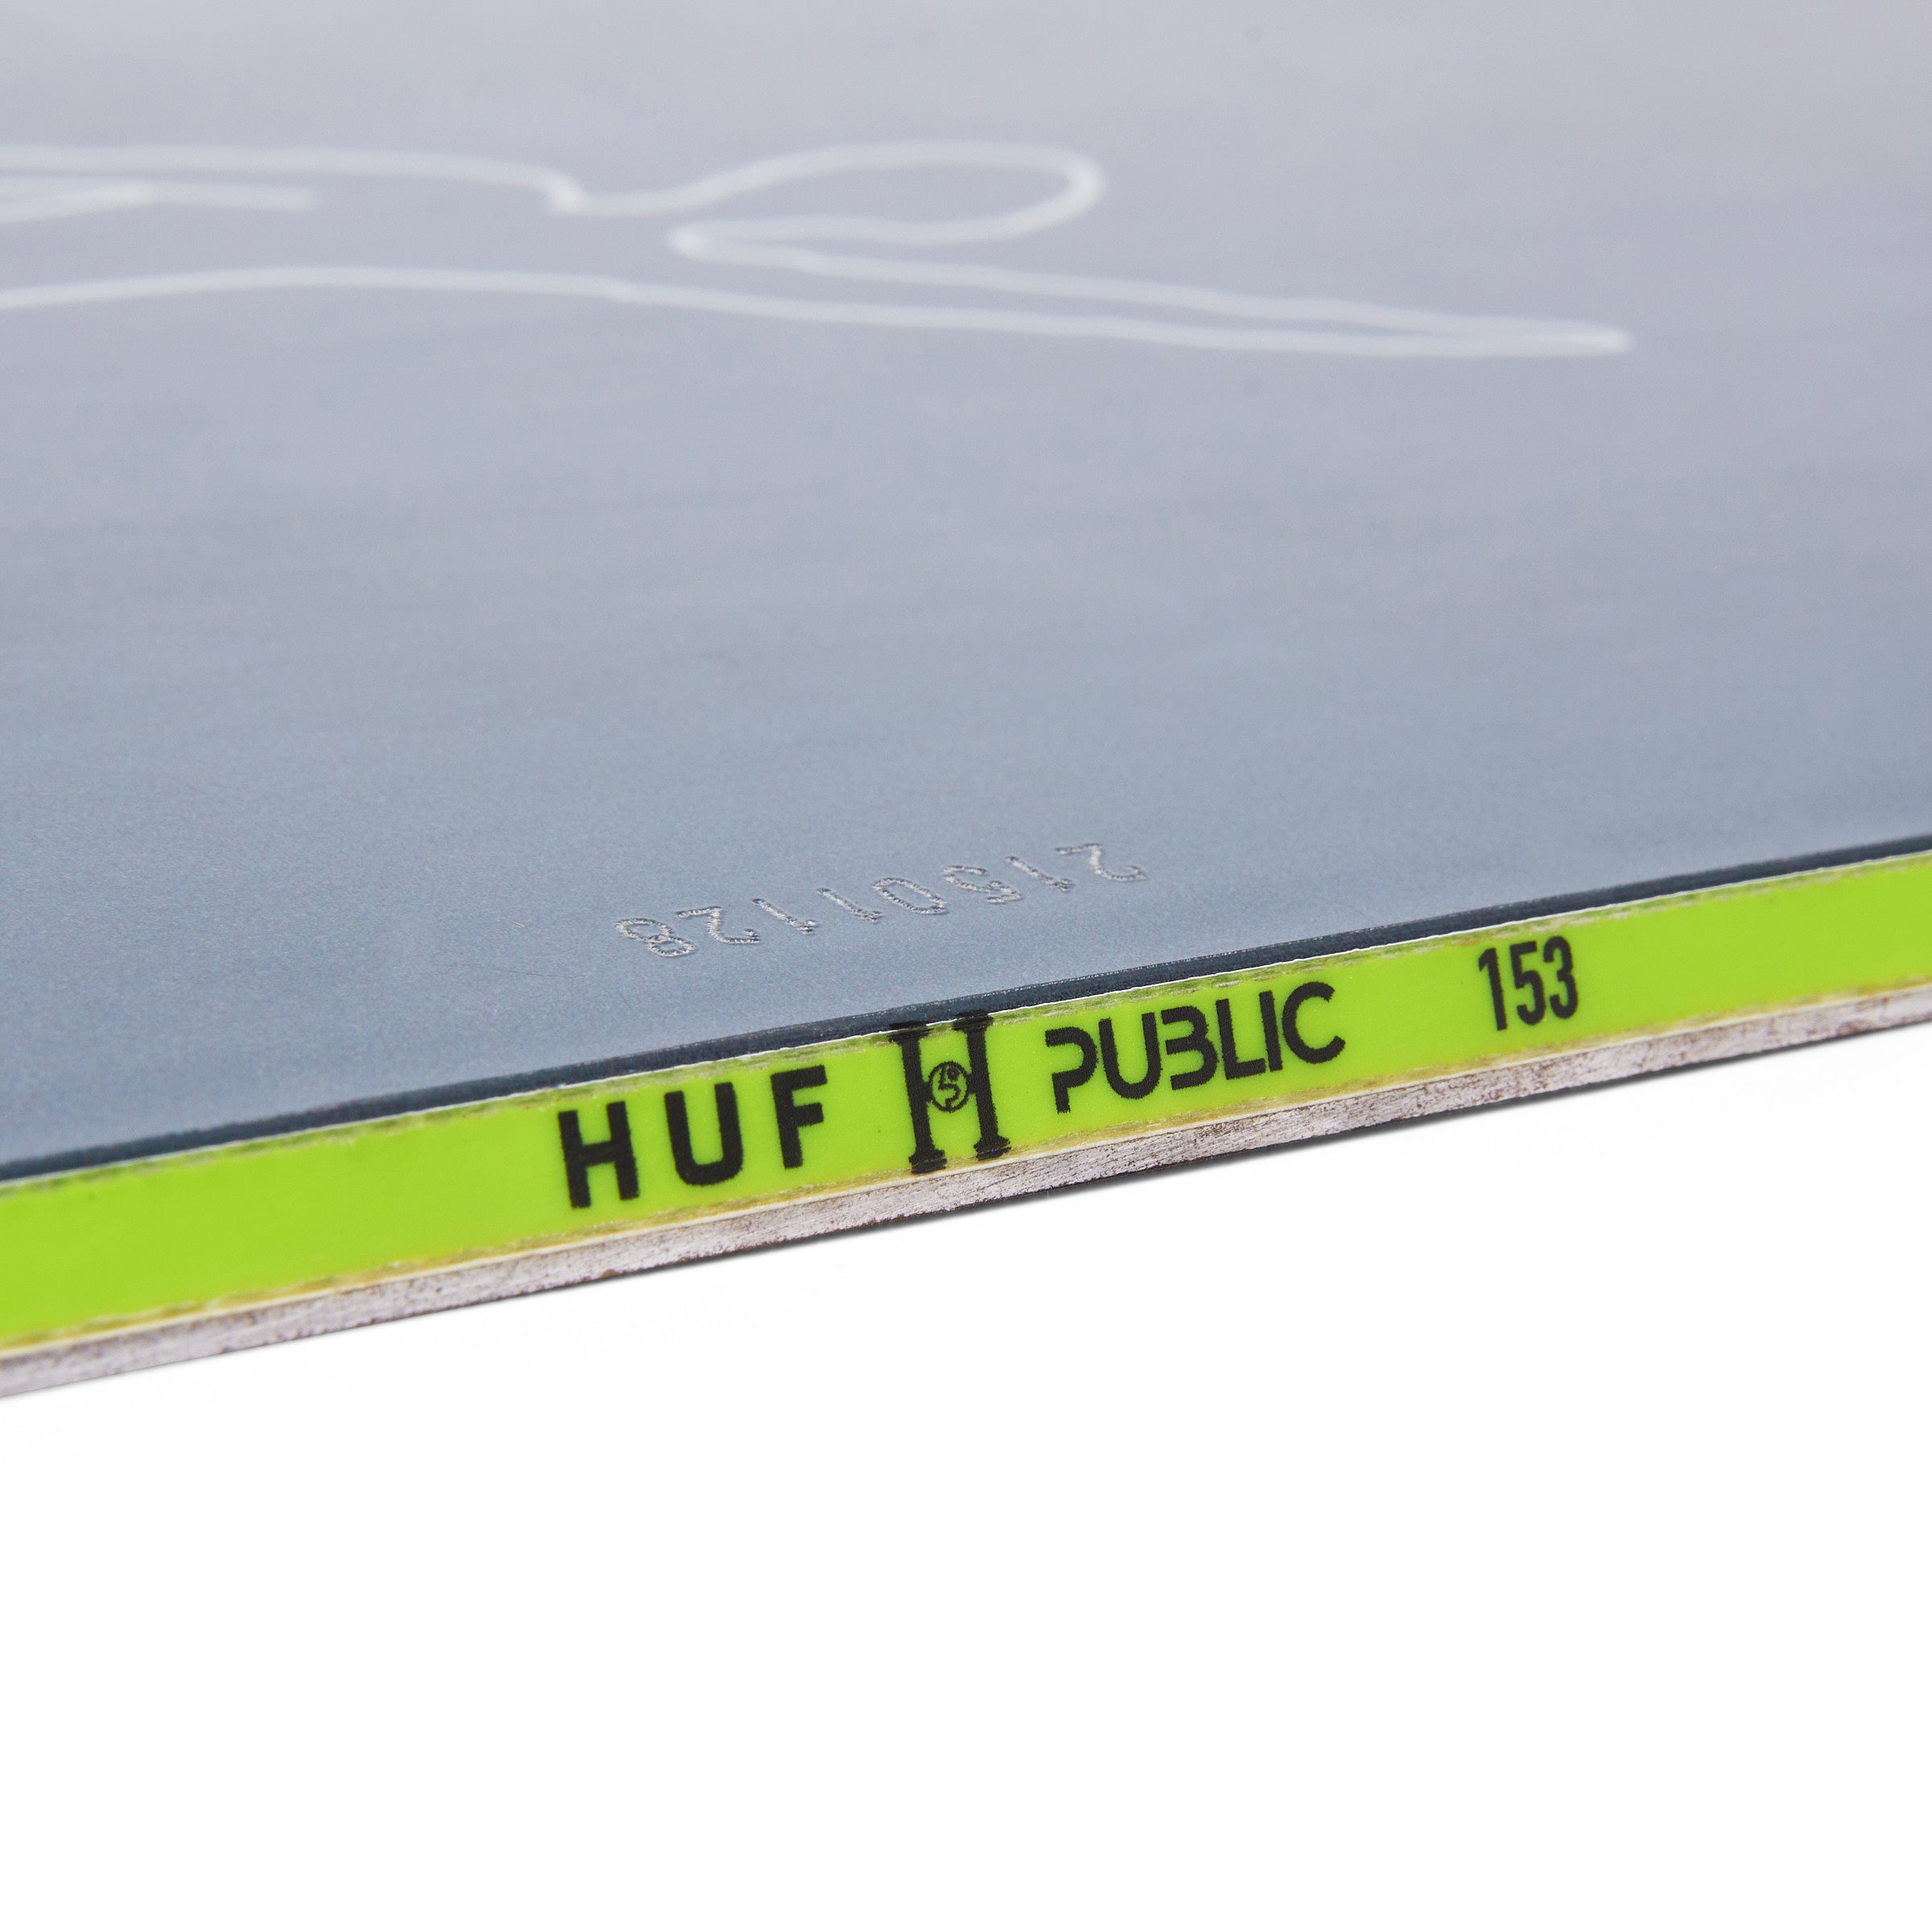 HUF X PUBLIC Display 153